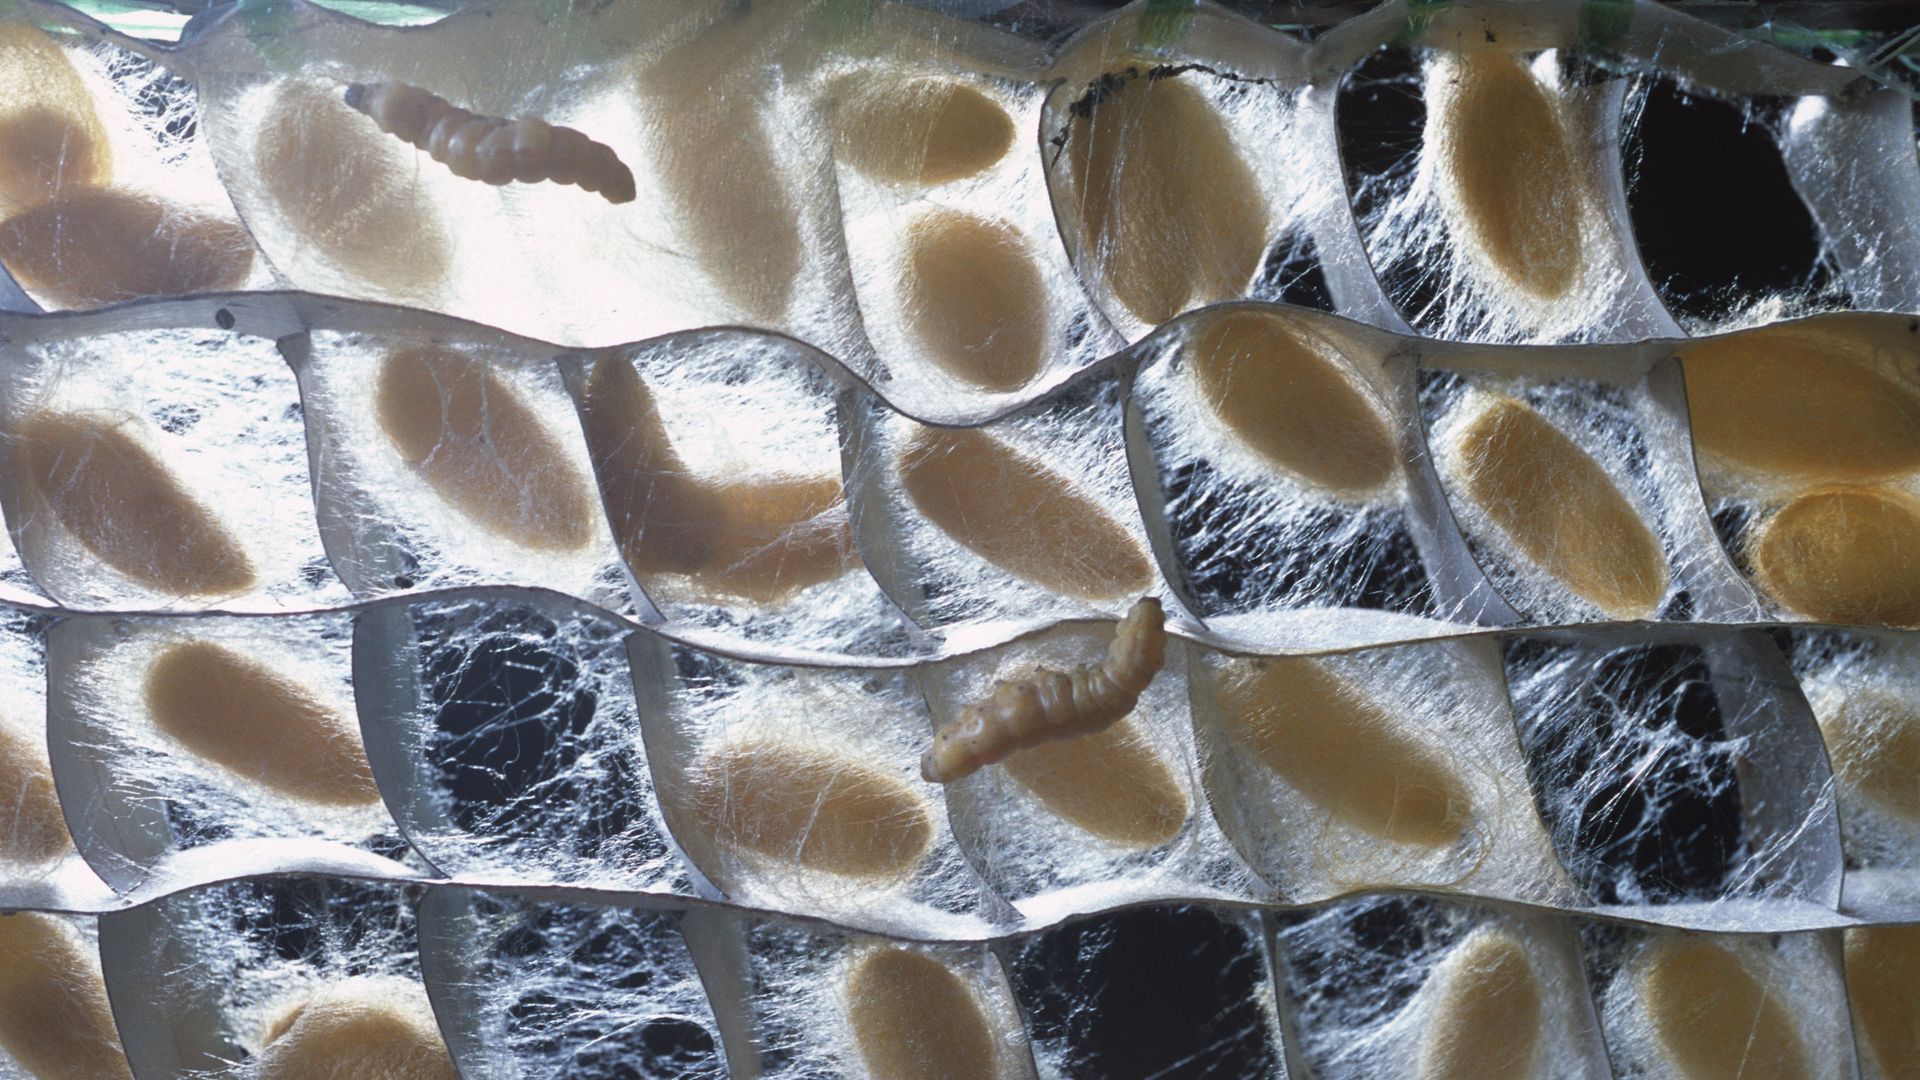 Silkworm cocoon photo.